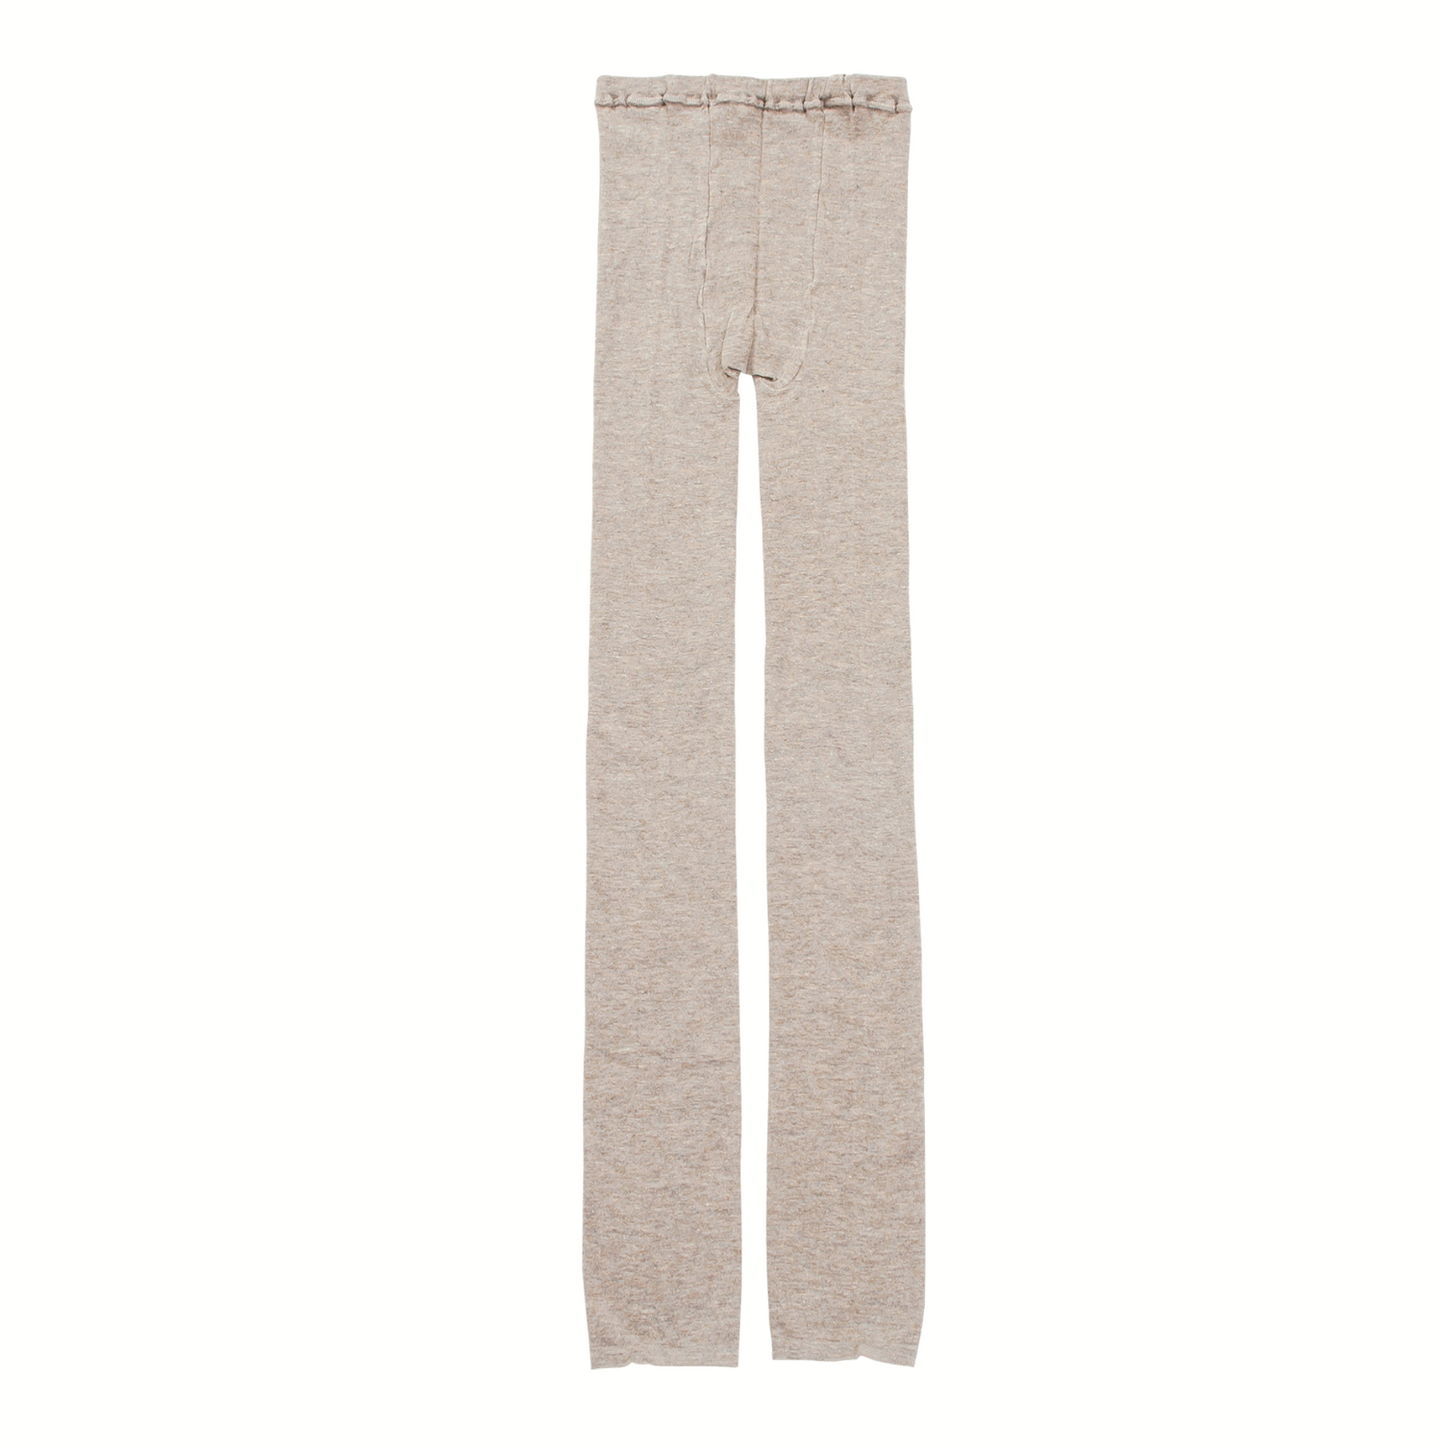 memeri : modal cotton leggings long